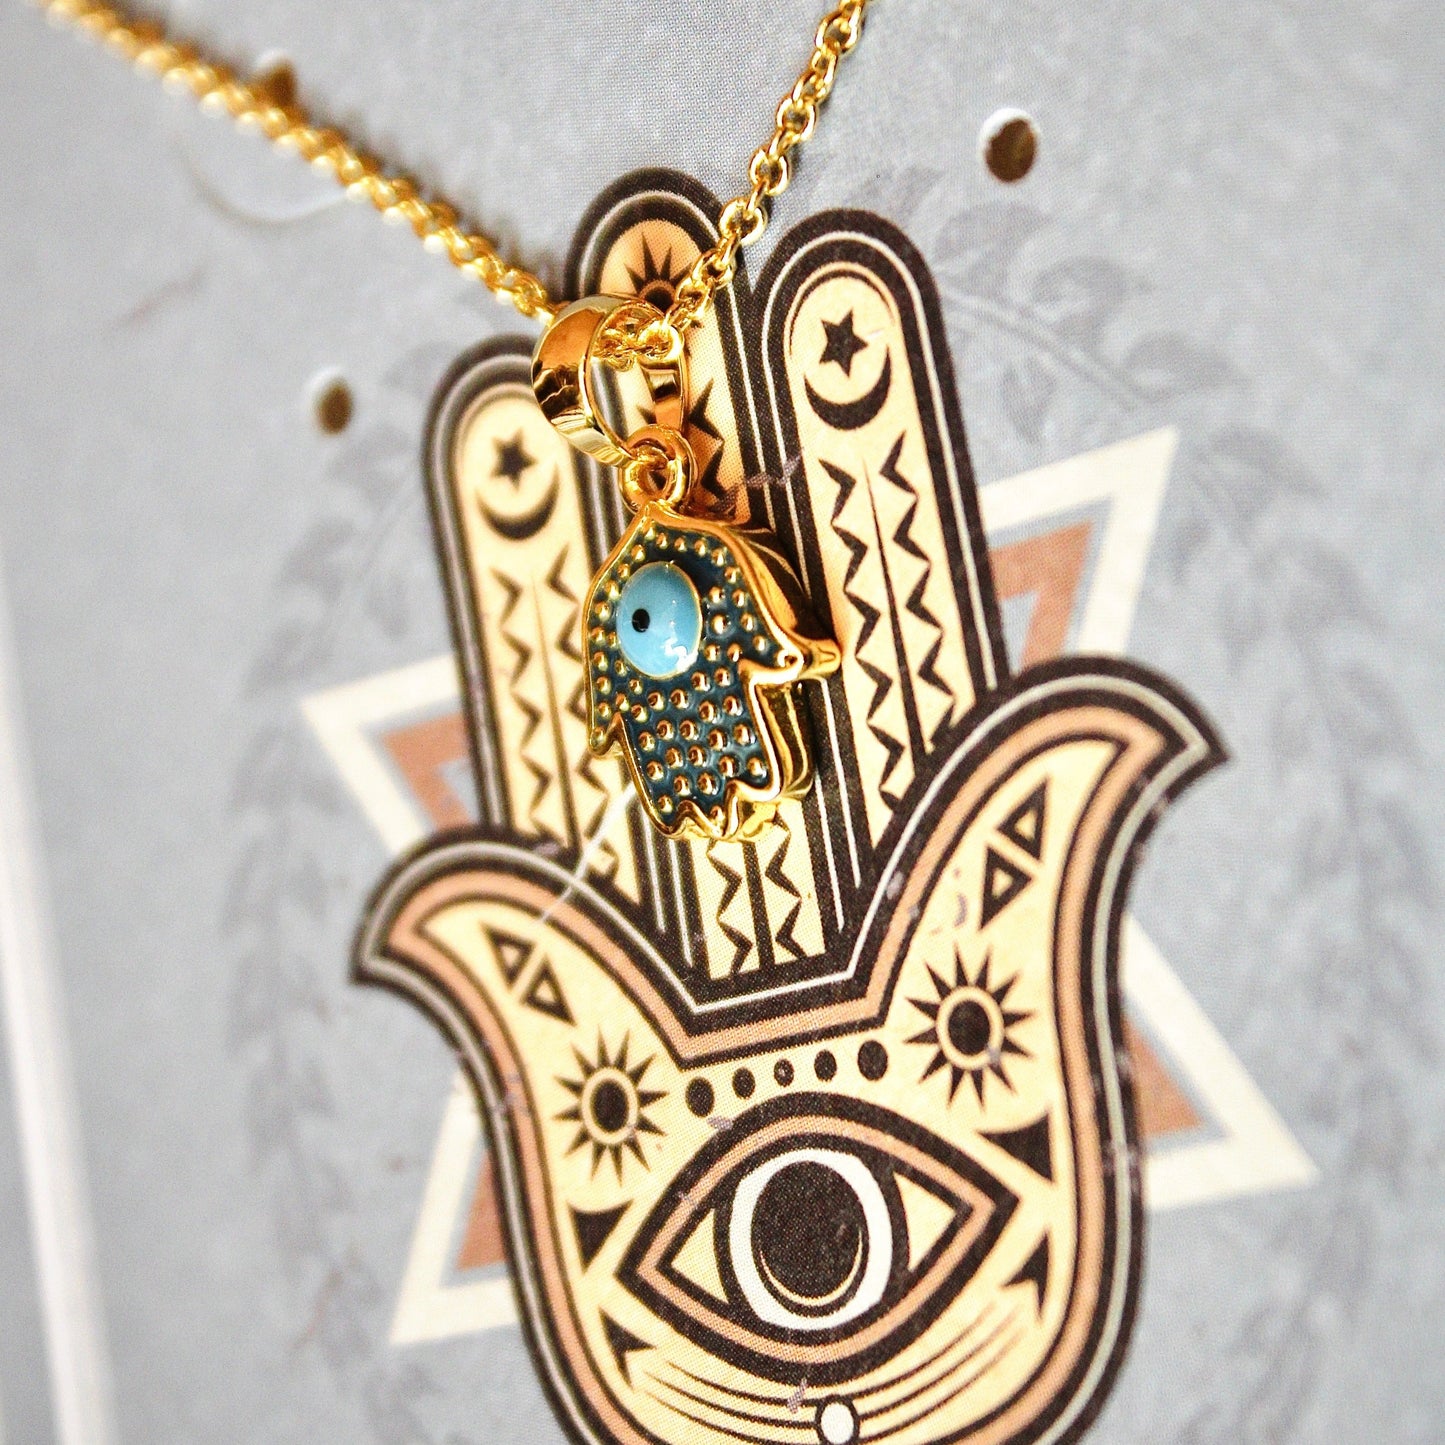 Gold Hamsa necklace with blue gem